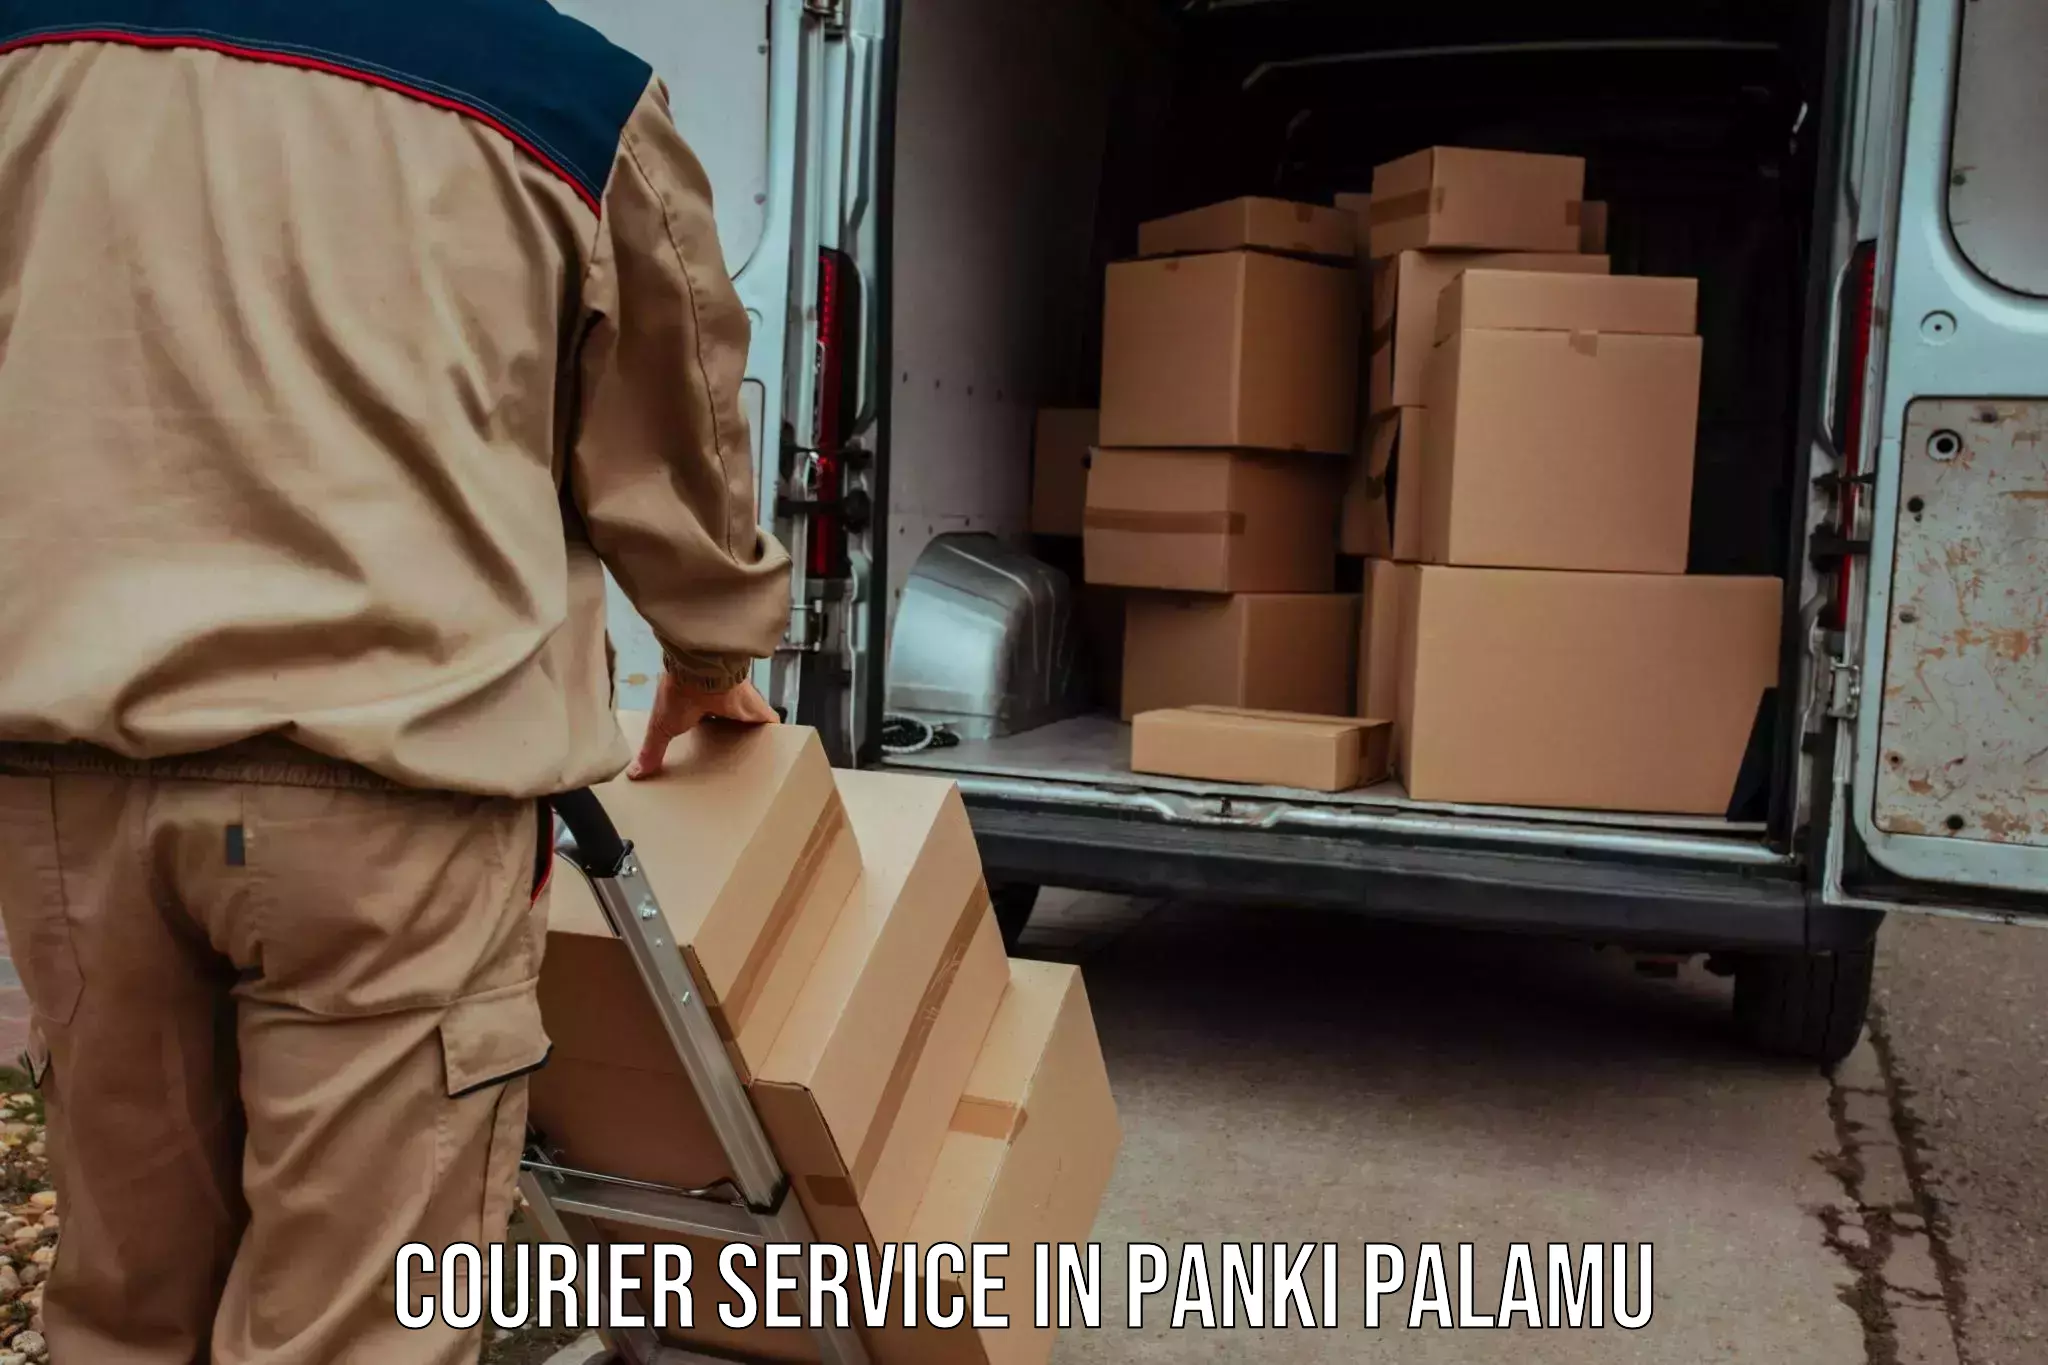 Fastest parcel delivery in Panki Palamu